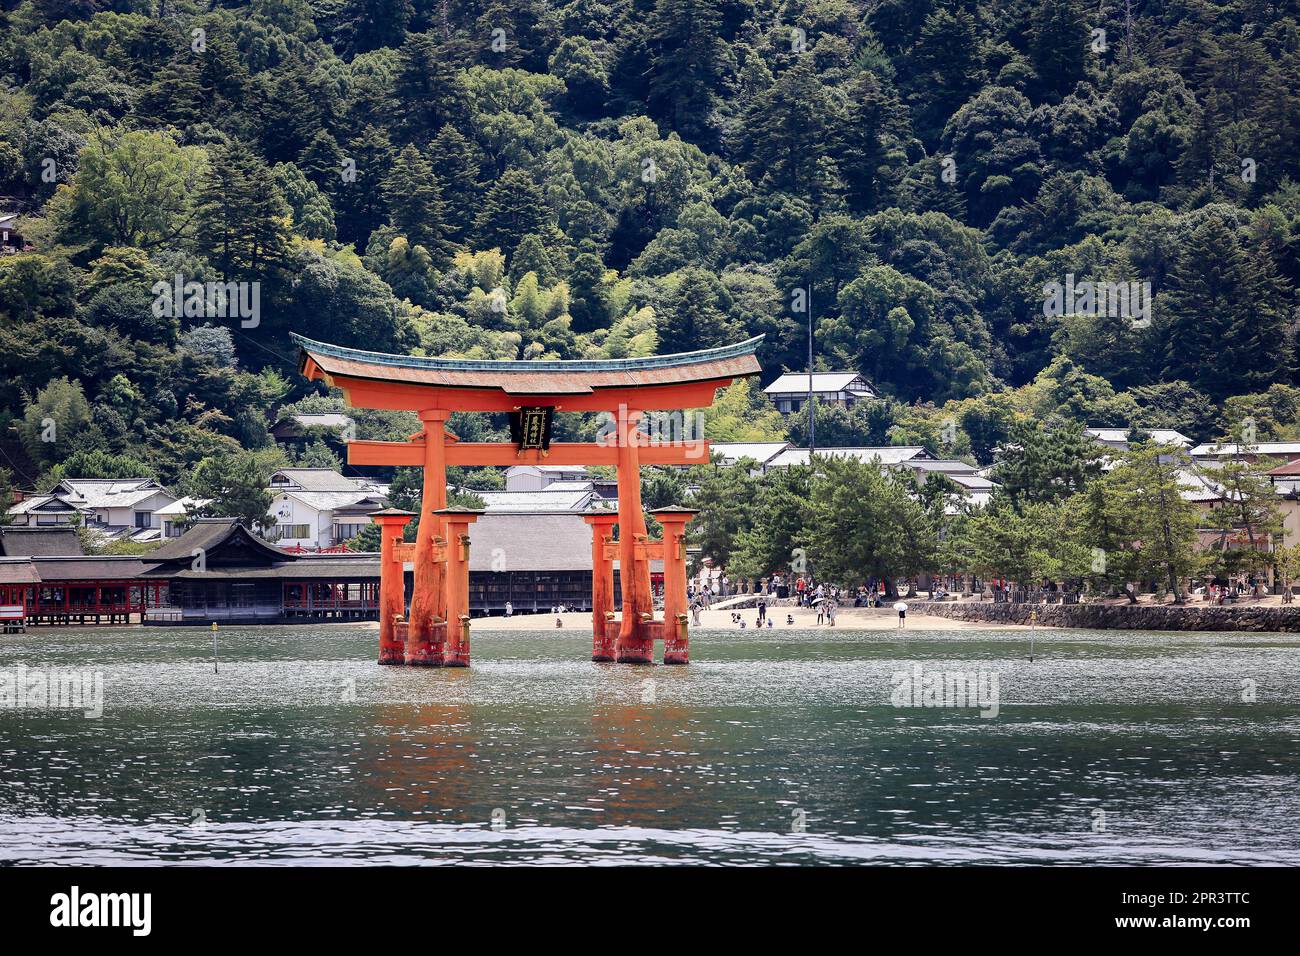 Japanese Torii Gate at Itsukushima Shrine, Miyajima island, Hiroshima Bay, part of the Three Views of Japan highlights, most celebrated scenic sights Stock Photo